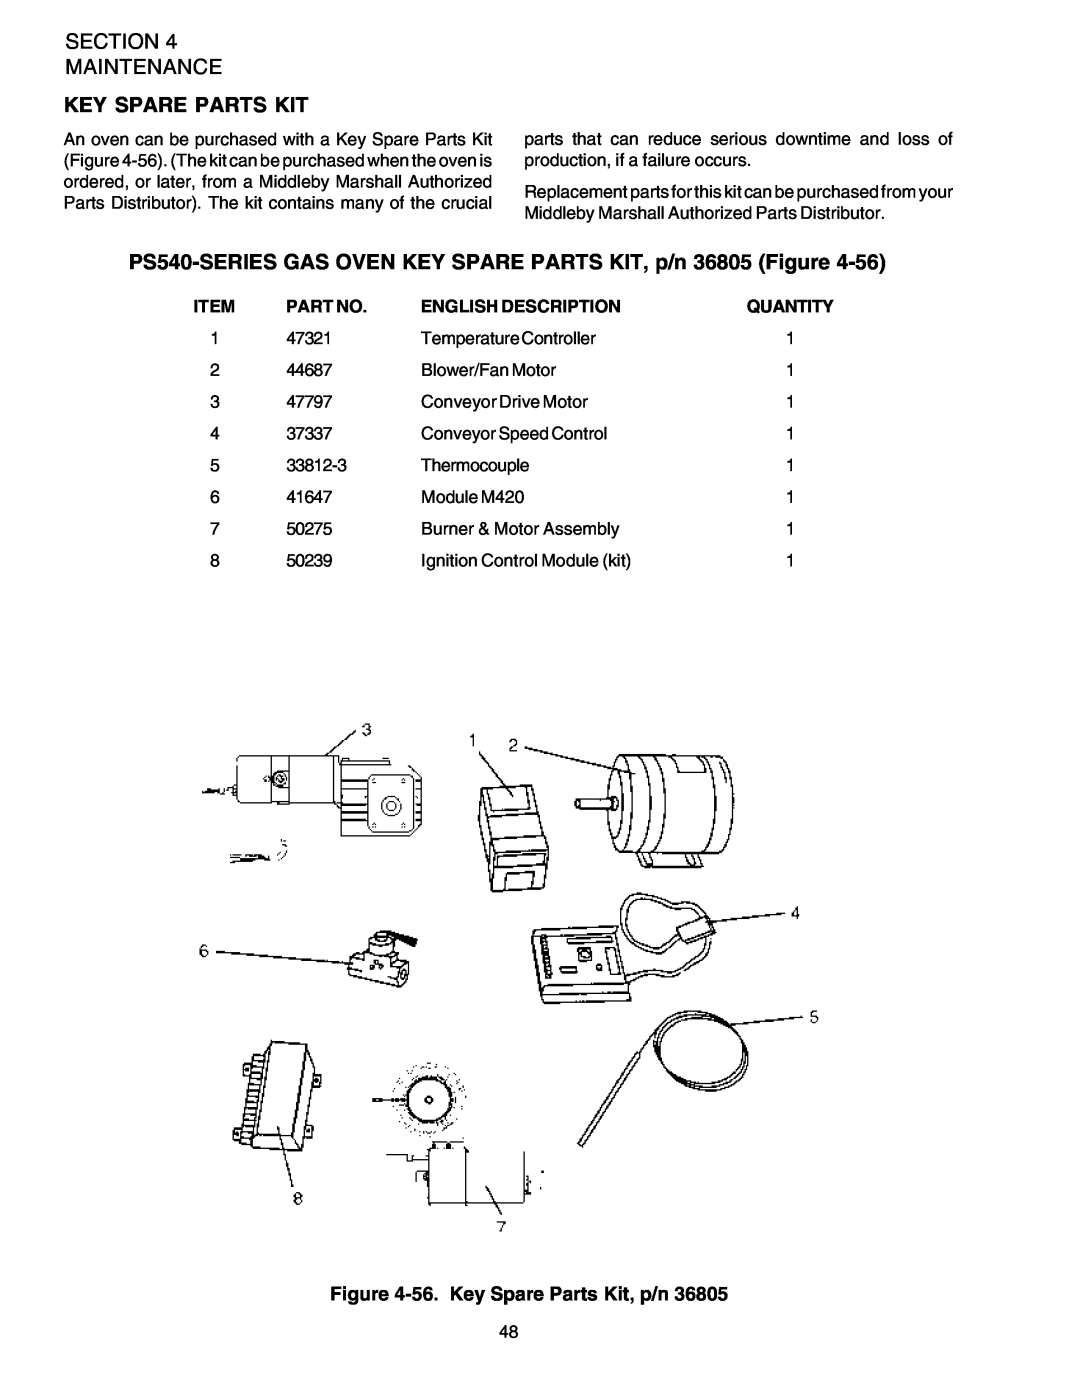 Middleby Marshall PS540 Section Maintenance, Key Spare Parts Kit, Item, Part No, English Description, Quantity 